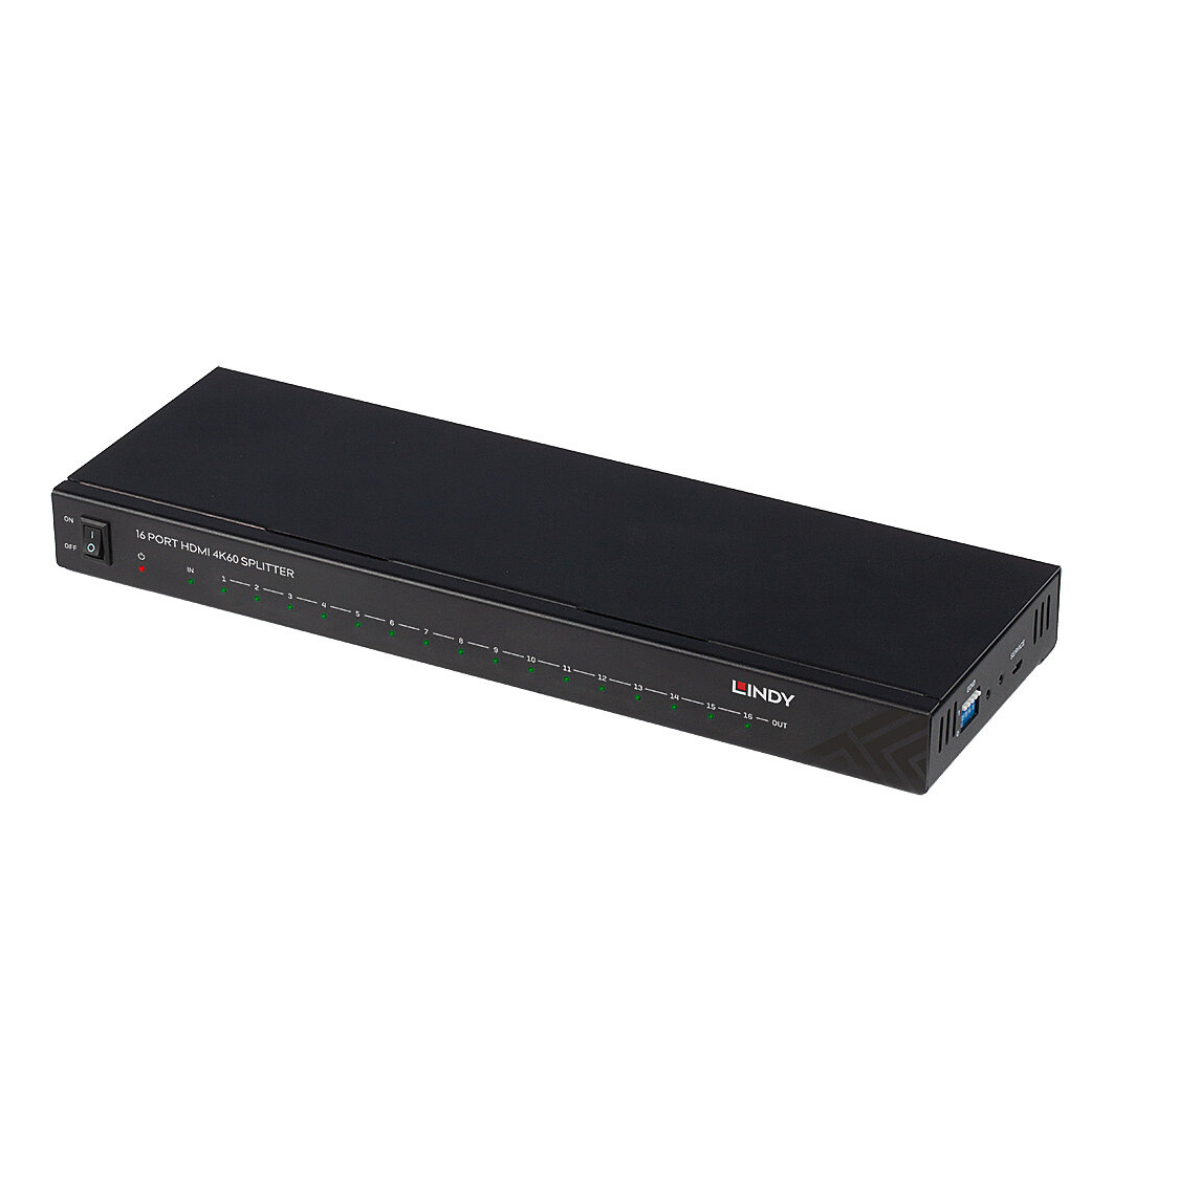 Distributeur/Splitter HDMI 2.0 HDCP 2.2 - 1 entrée 4 sorties - HD 4K - LA BS